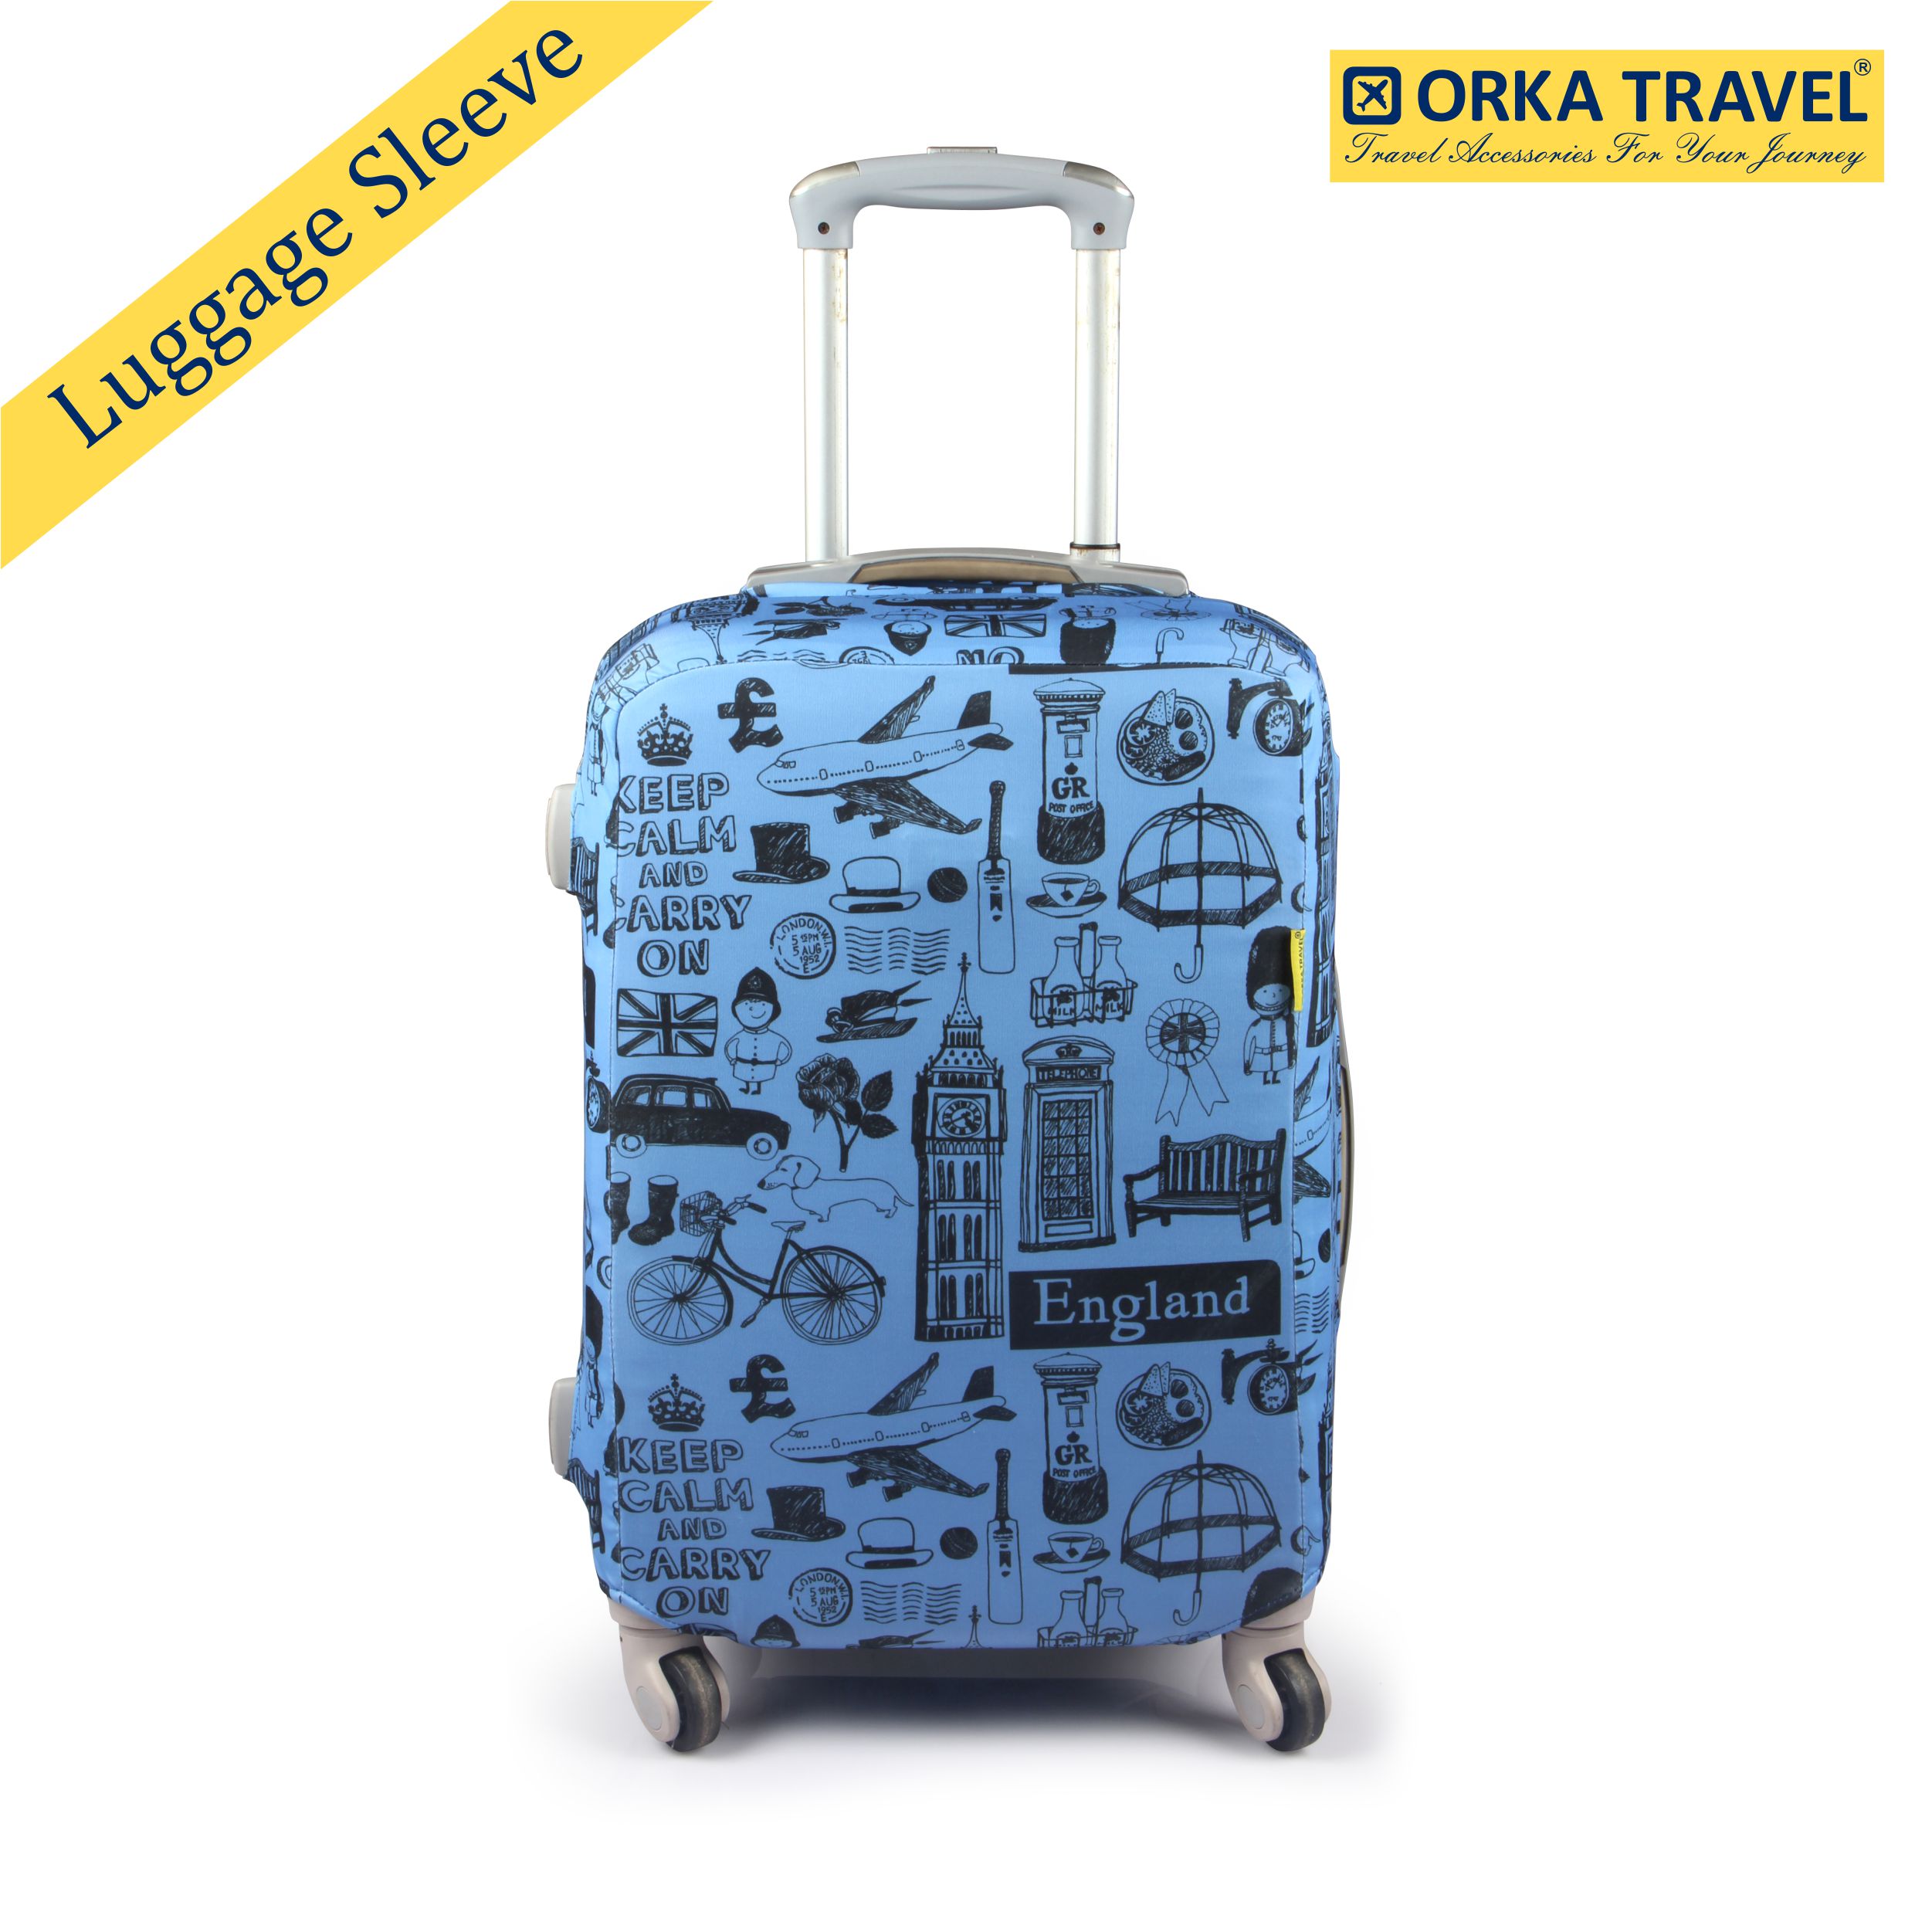 Orka Travel Luggage Cover Keep Calm